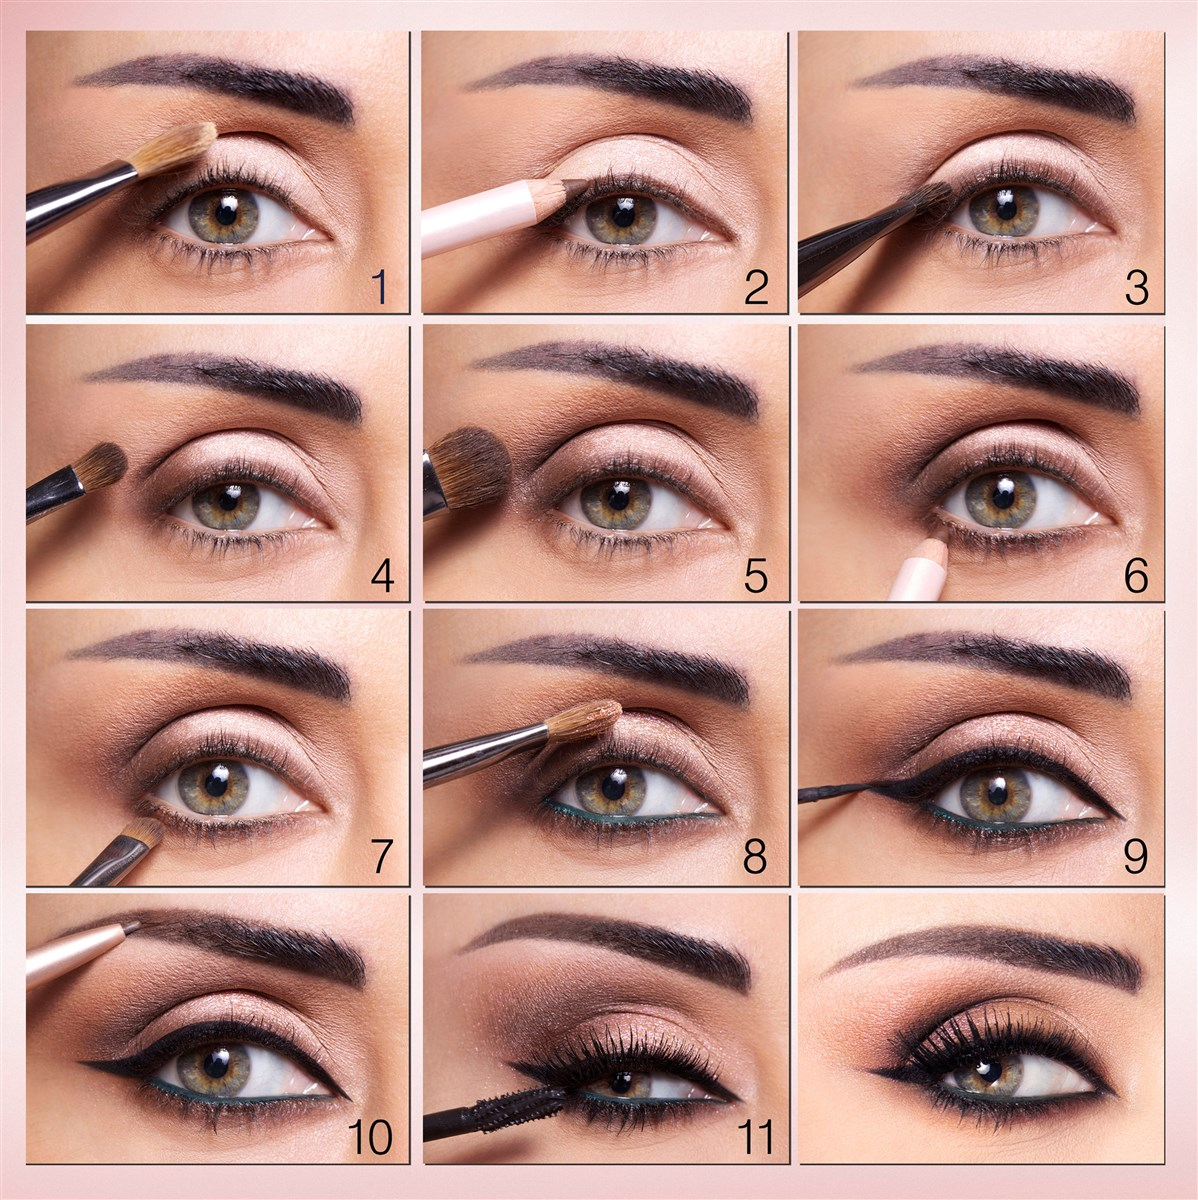 Steps Of Doing Eye Makeup Easiest Way How To Apply Eyeshadow Properly